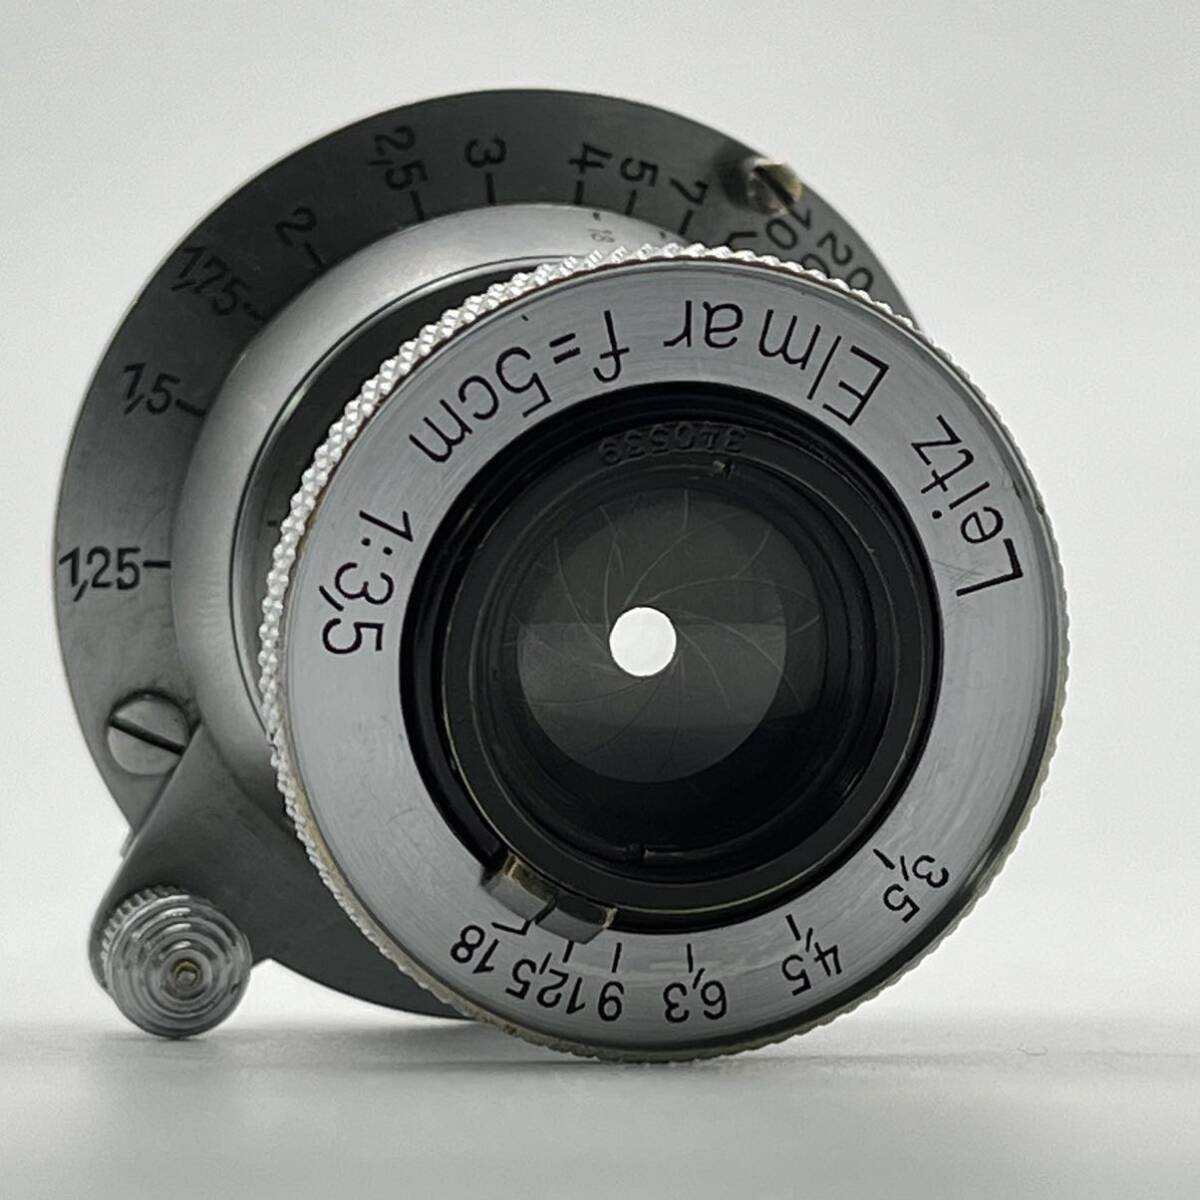 Leitz Elmar 5cm f3.5 ライツ エルマー 50mm Ernst Leitz Wetzlar Leica ライカ Lマウント 1936年 ドイツ製 沈胴式 標準レンズ_画像10